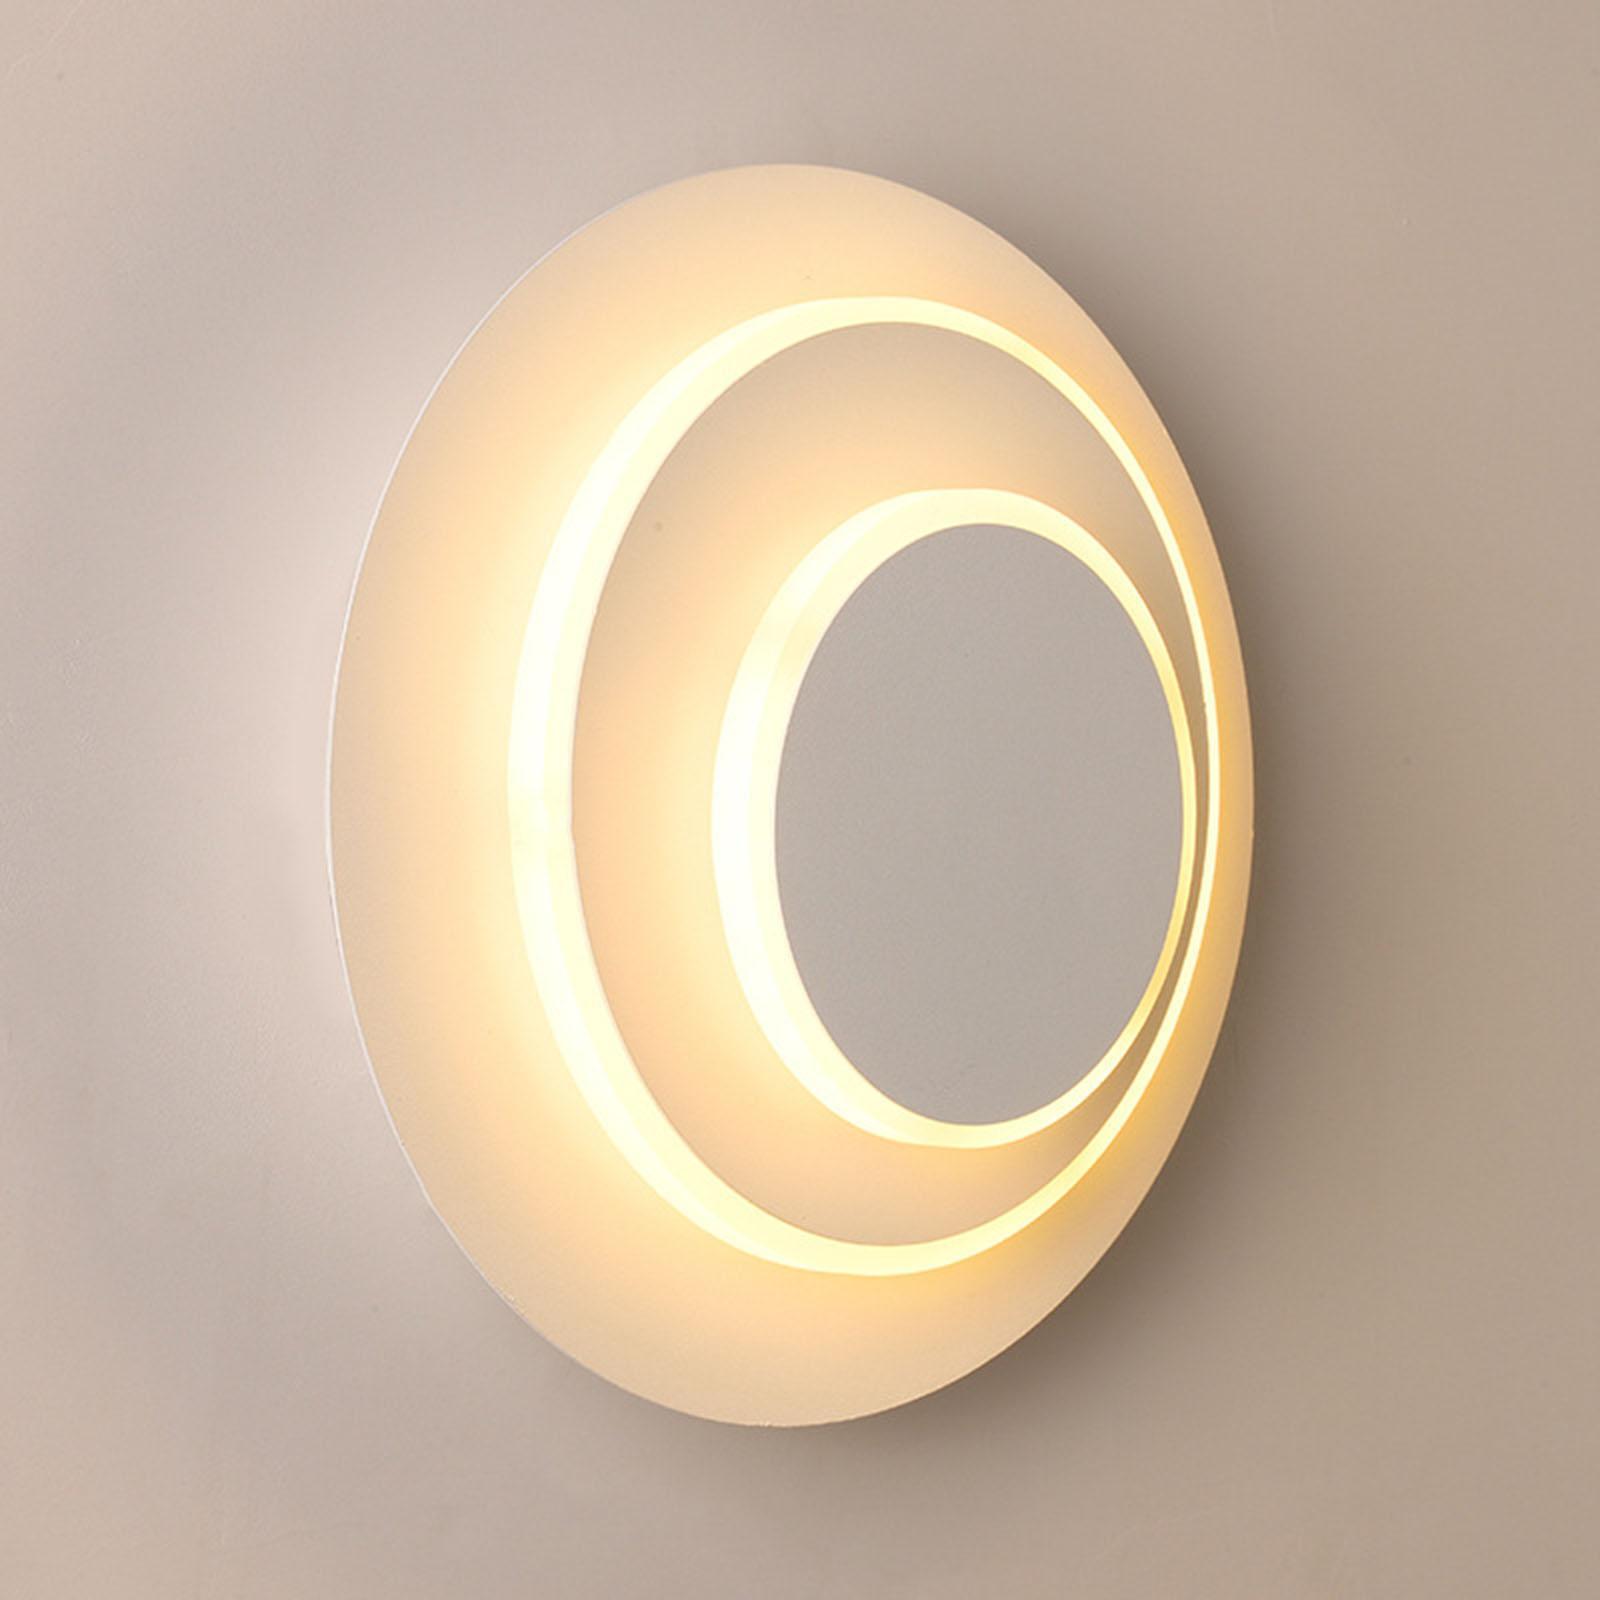 LED Bedside Light Fixture rotating Wall Lamp Living Room 3000k Warm White